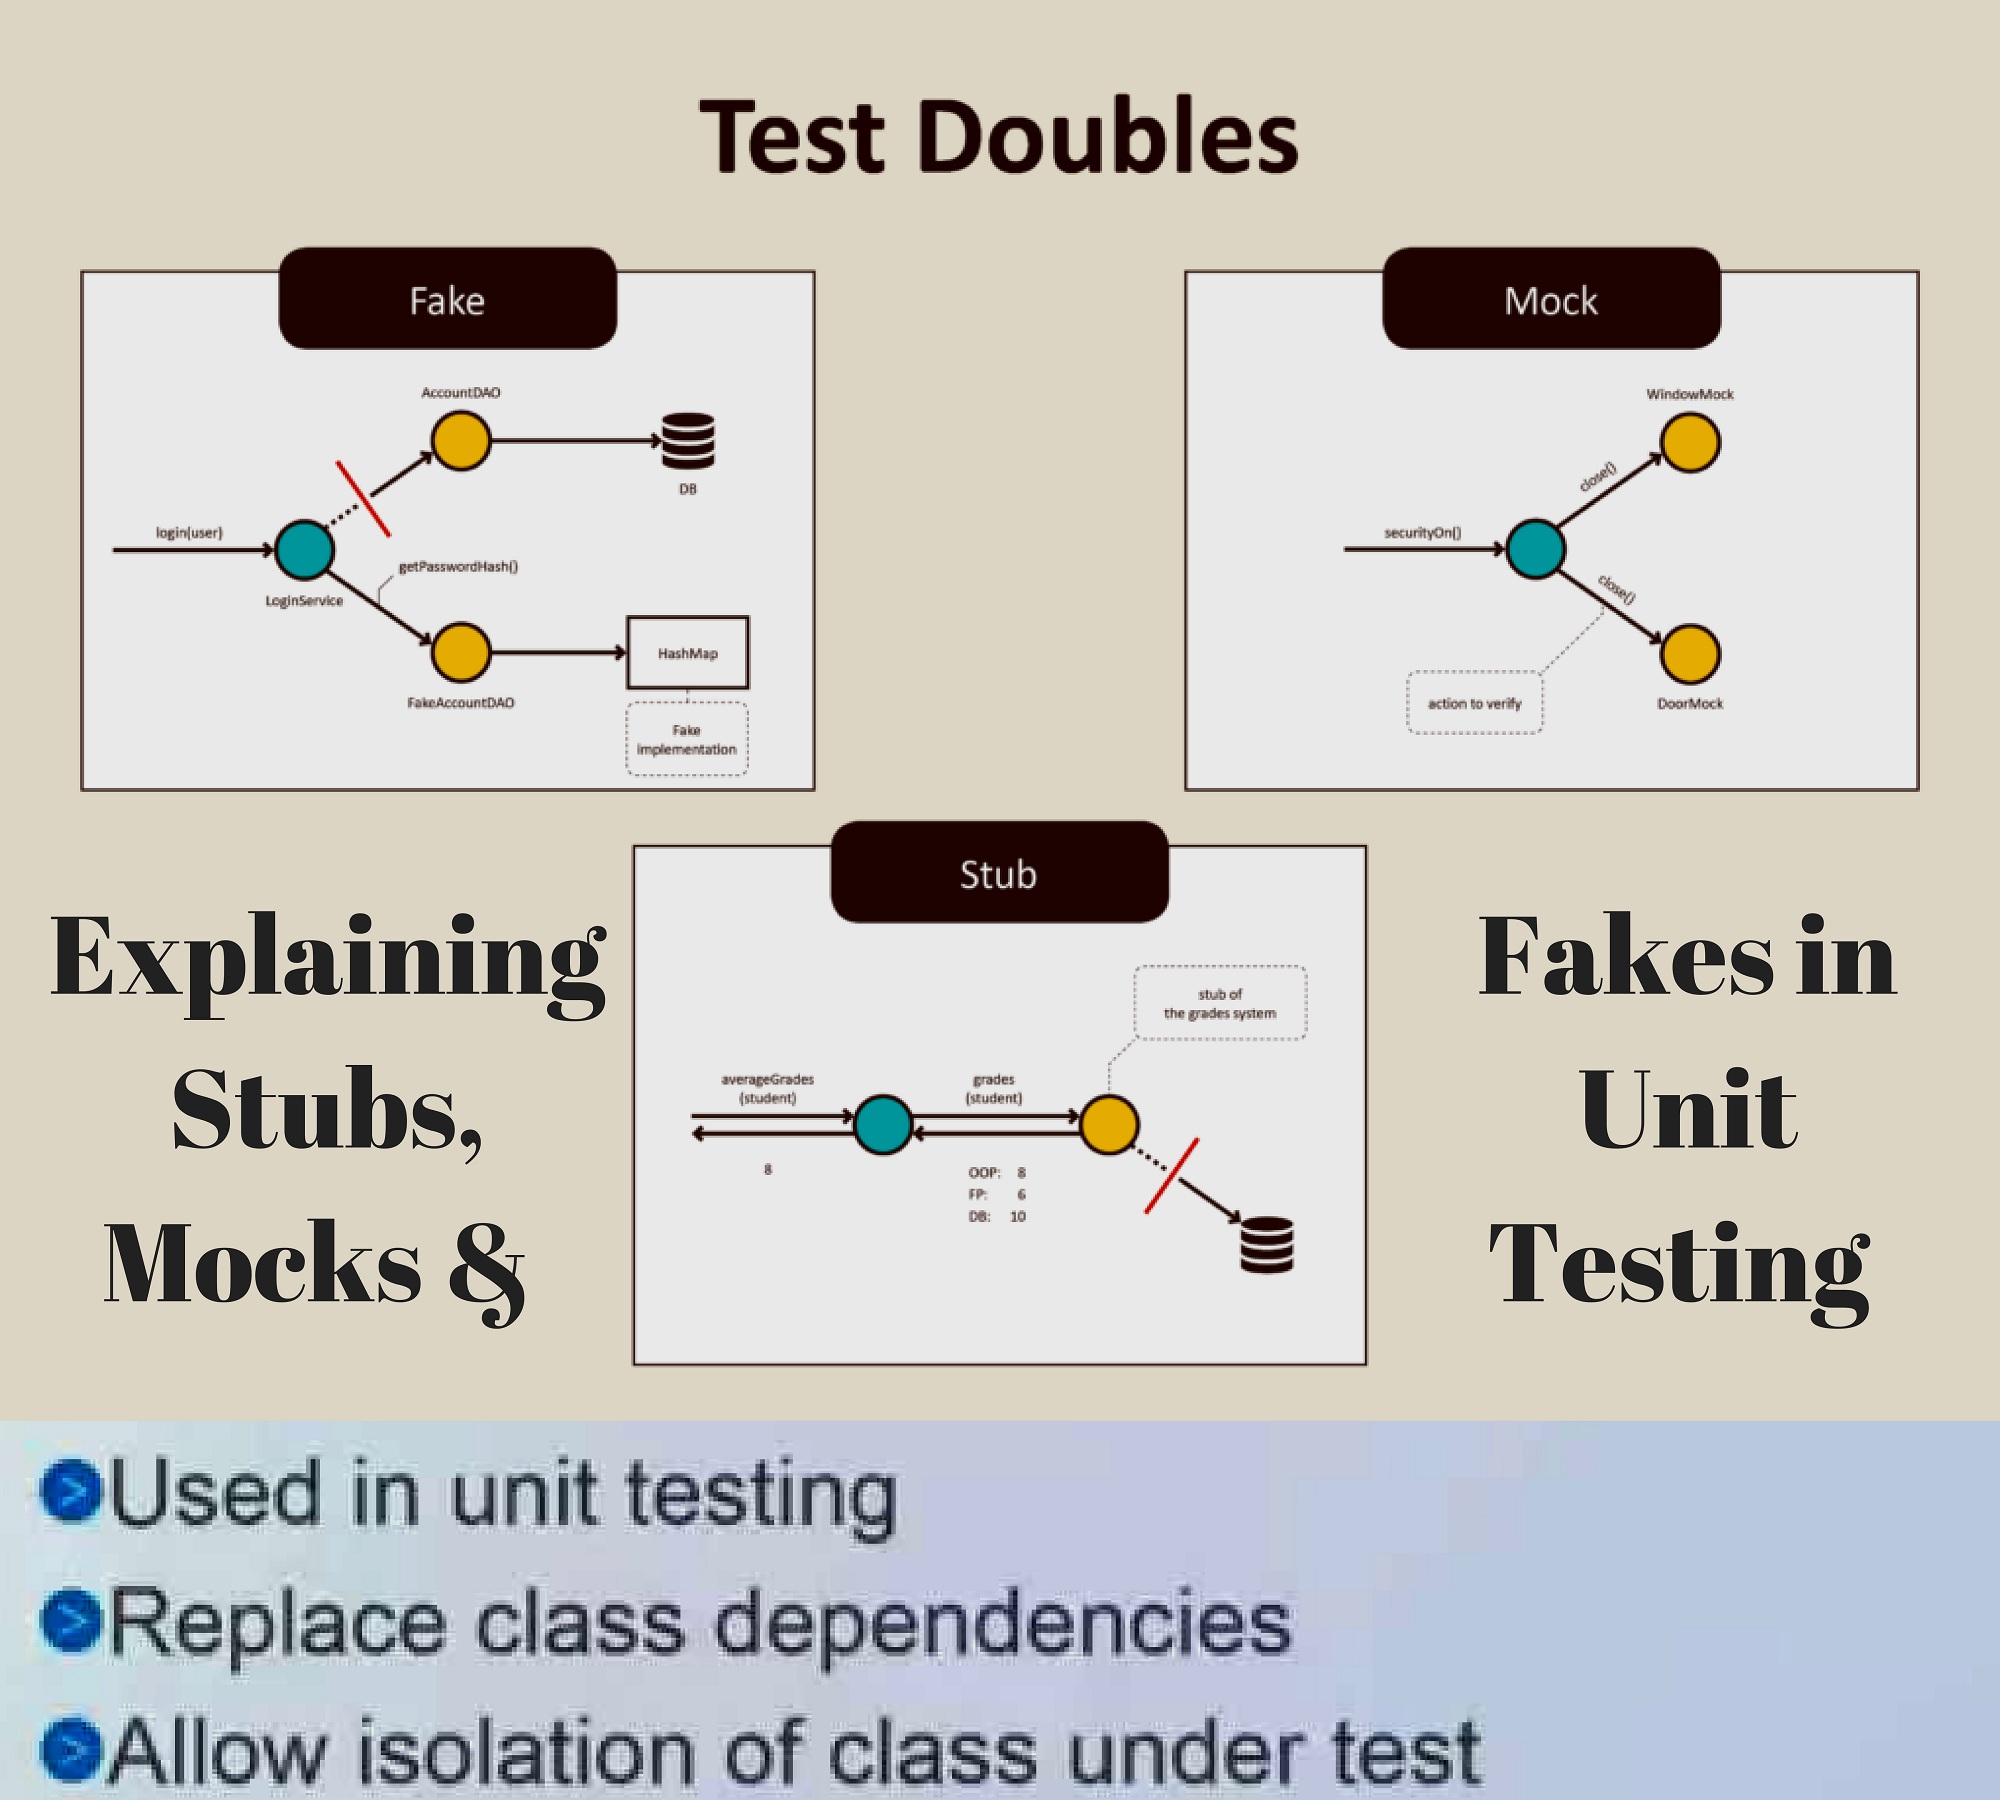 Explaining Stubs, Mocks & Fakes in Unit Testing